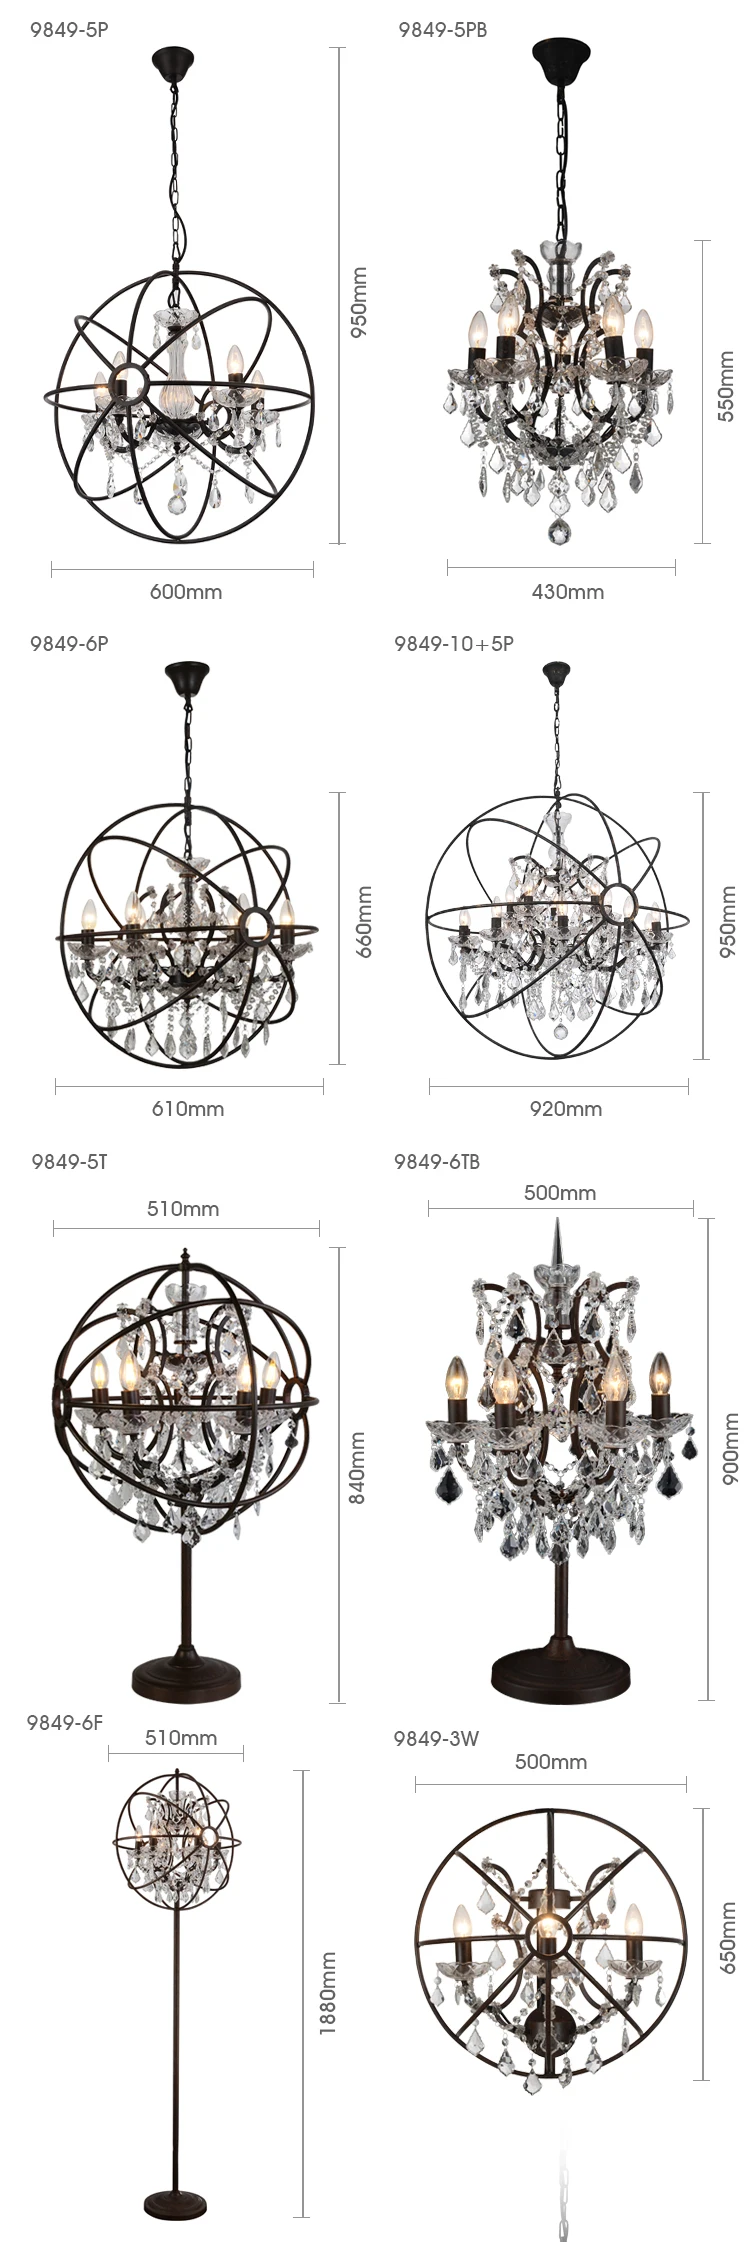 2019 new arrival modern big ball frame design metal chrome material crystal chandelier